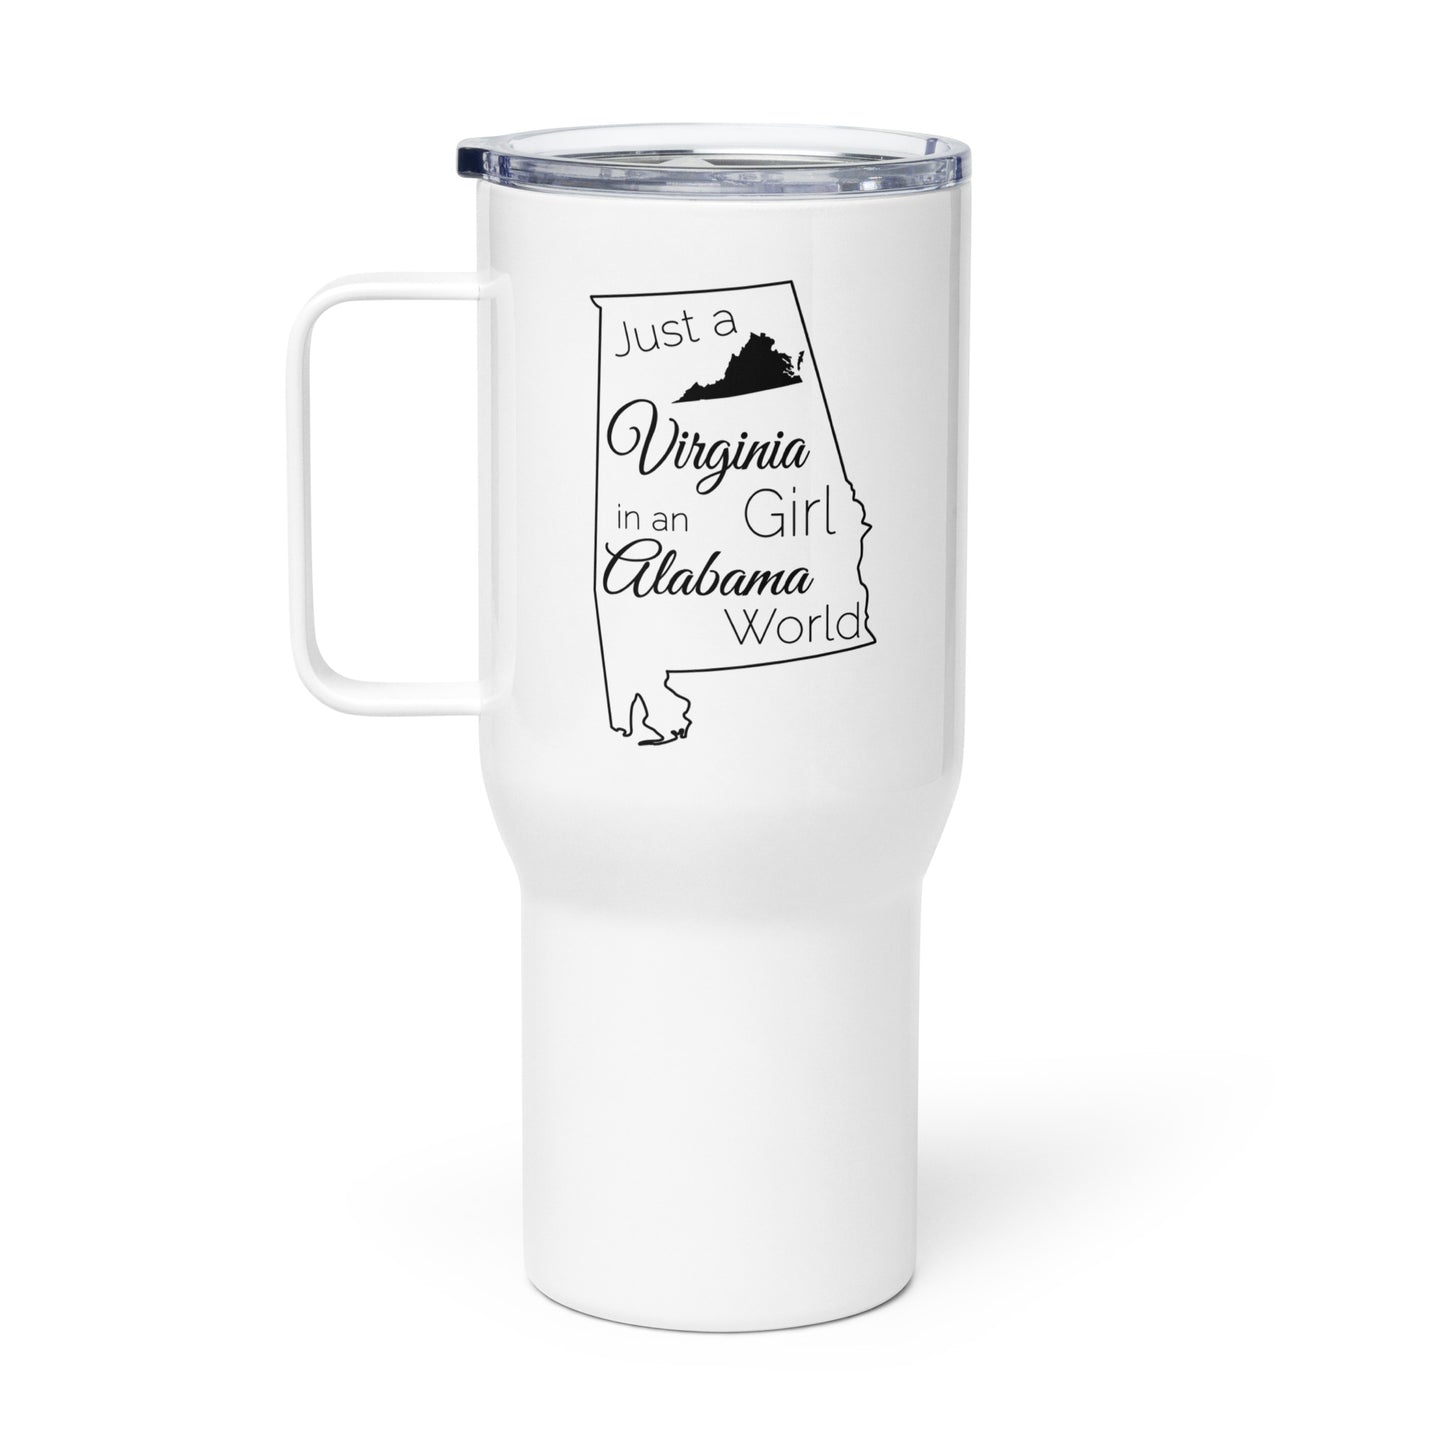 Just a Virginia Girl in an Alabama World Travel mug with a handle